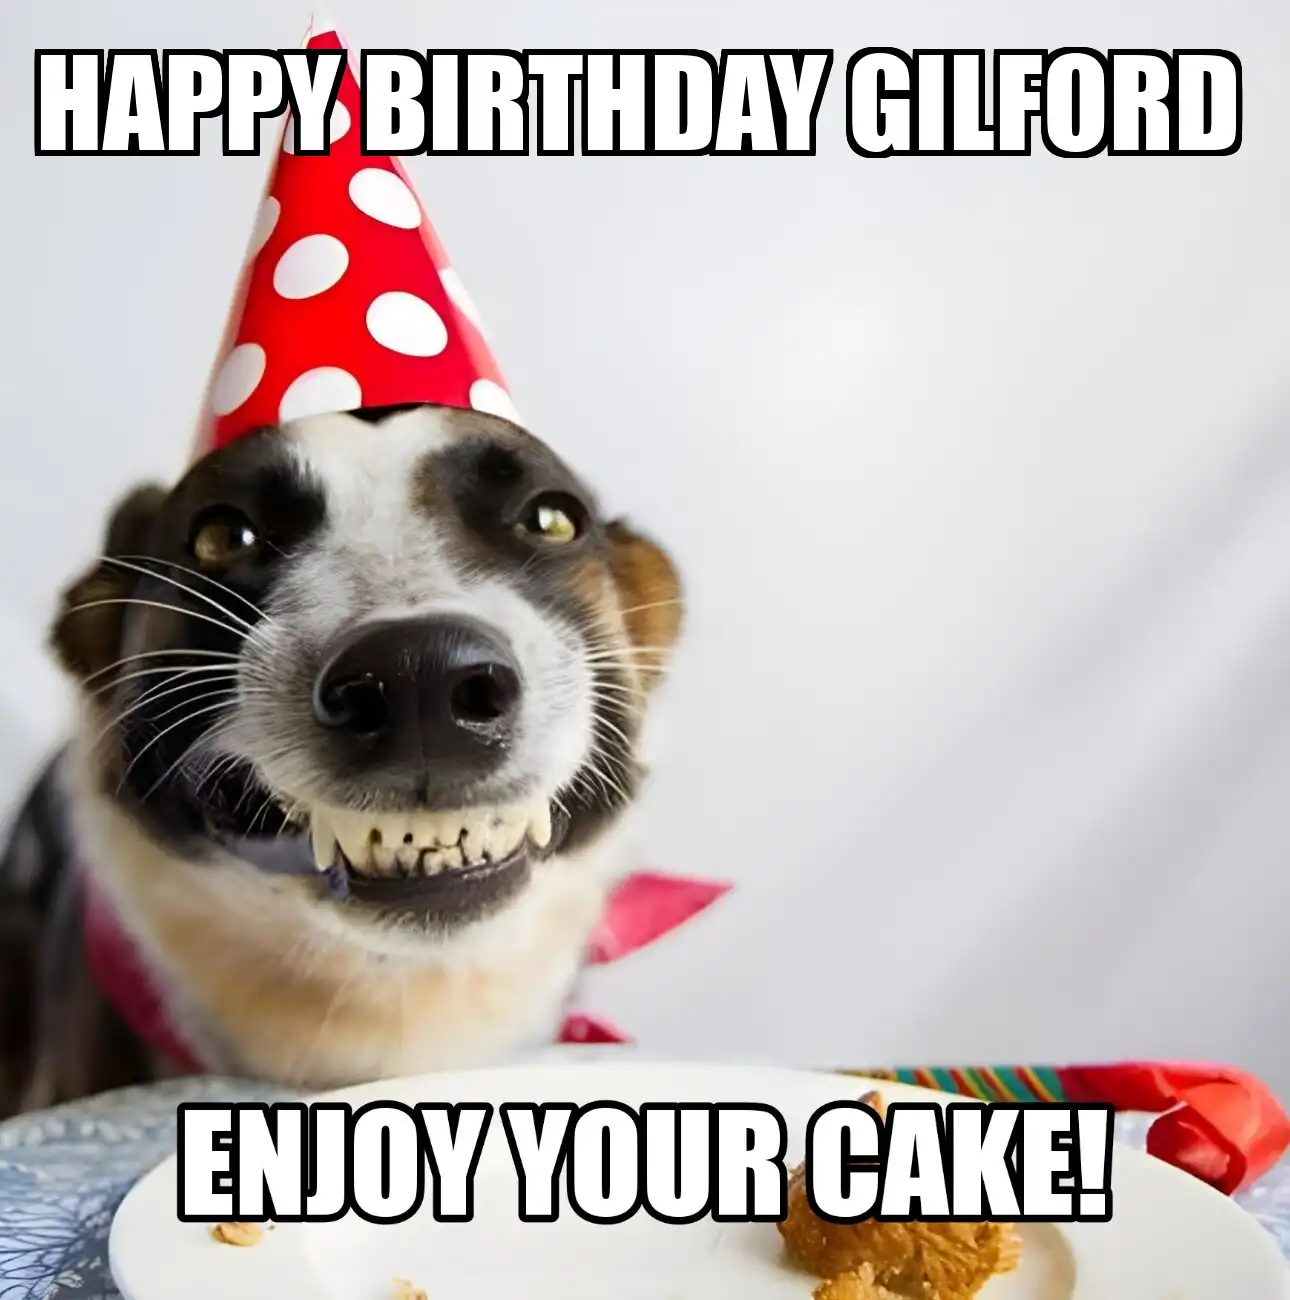 Happy Birthday Gilford Enjoy Your Cake Dog Meme